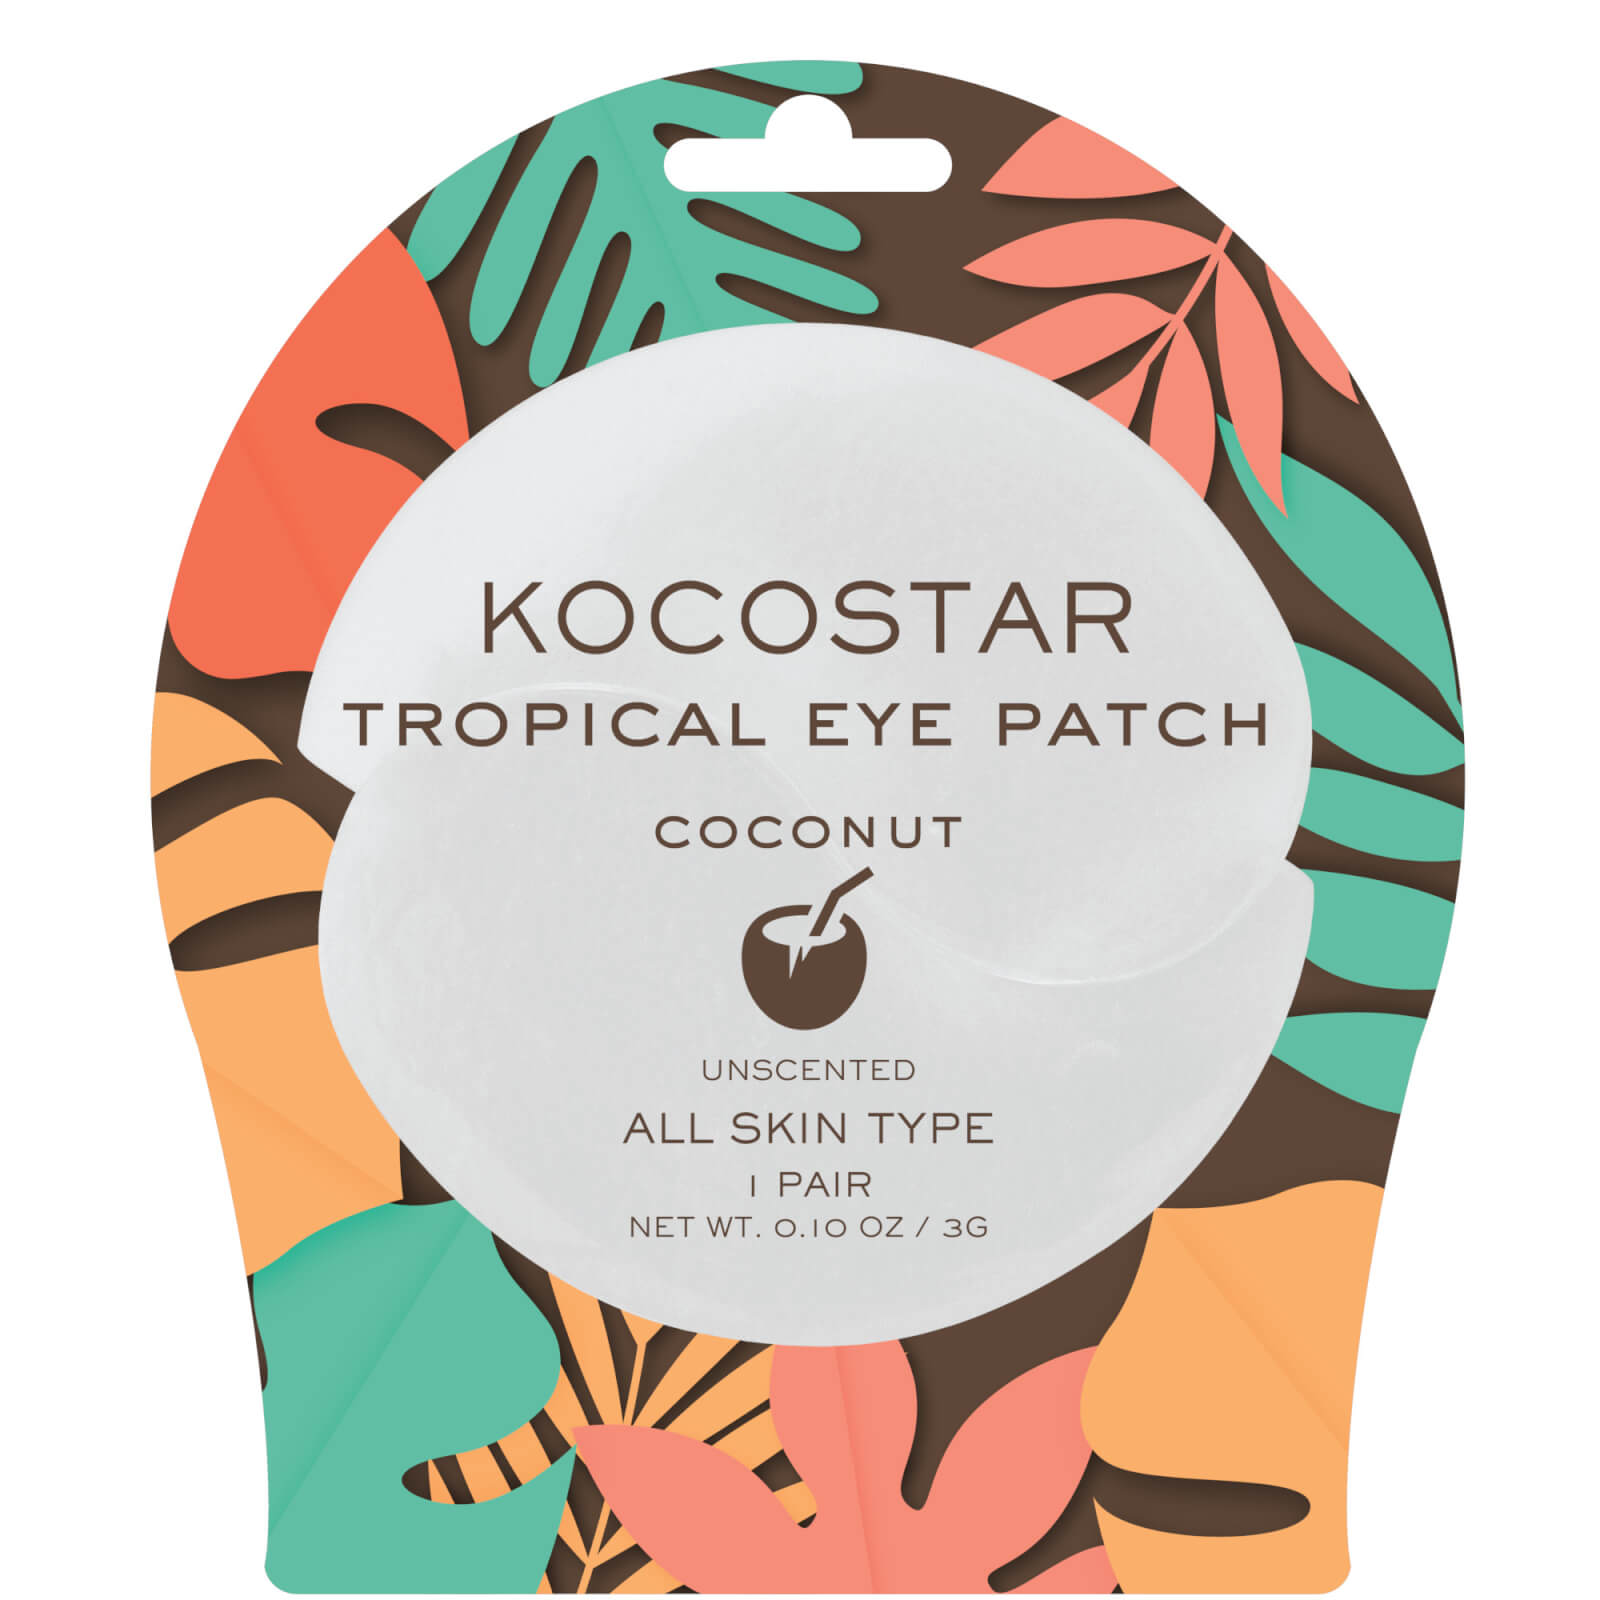 Kocostar Tropical Eye Patch – Coconut lookfantastic.com imagine